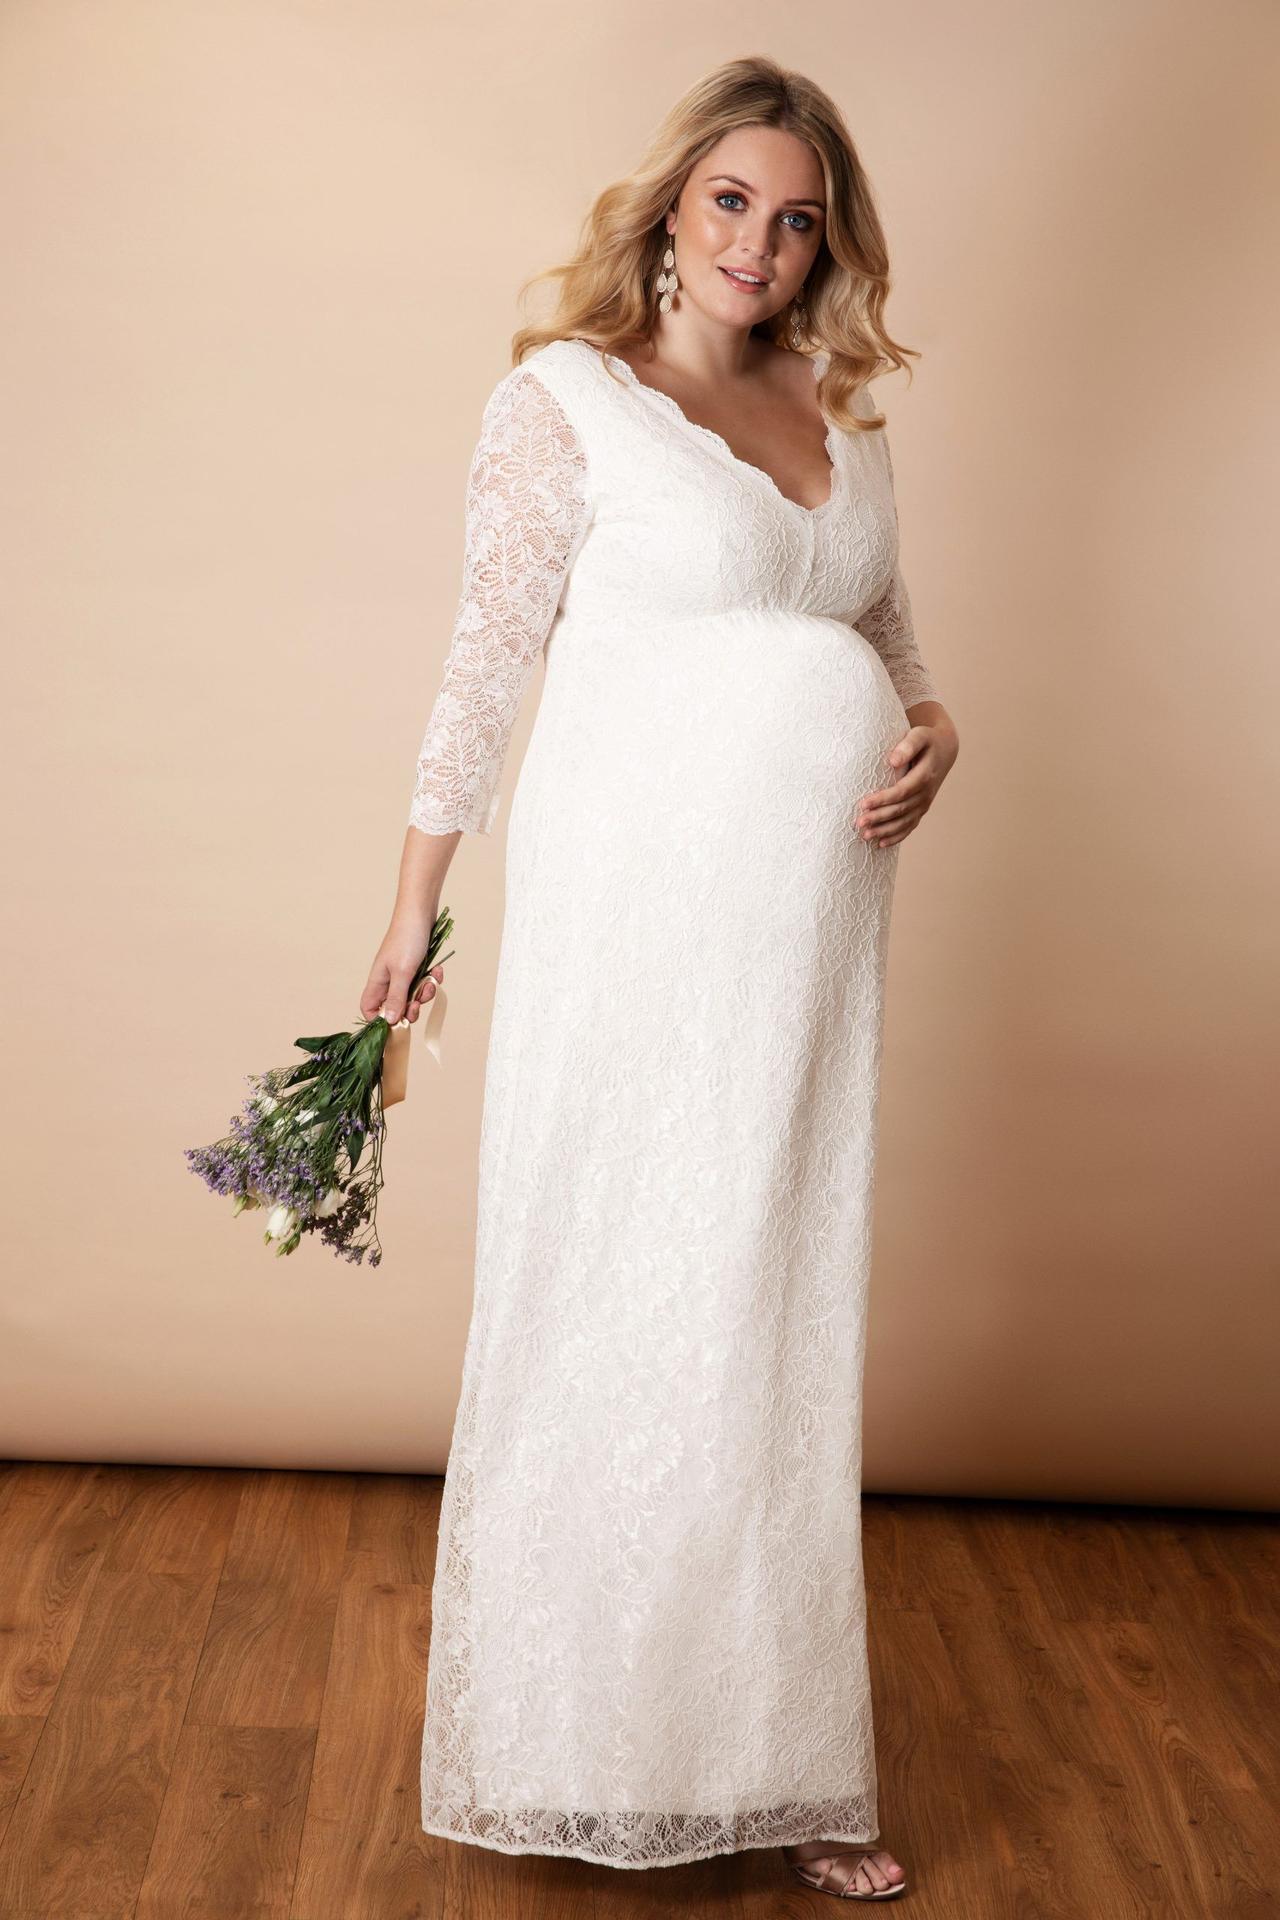 Model wearing a lace maternity long sleeved wedding dress